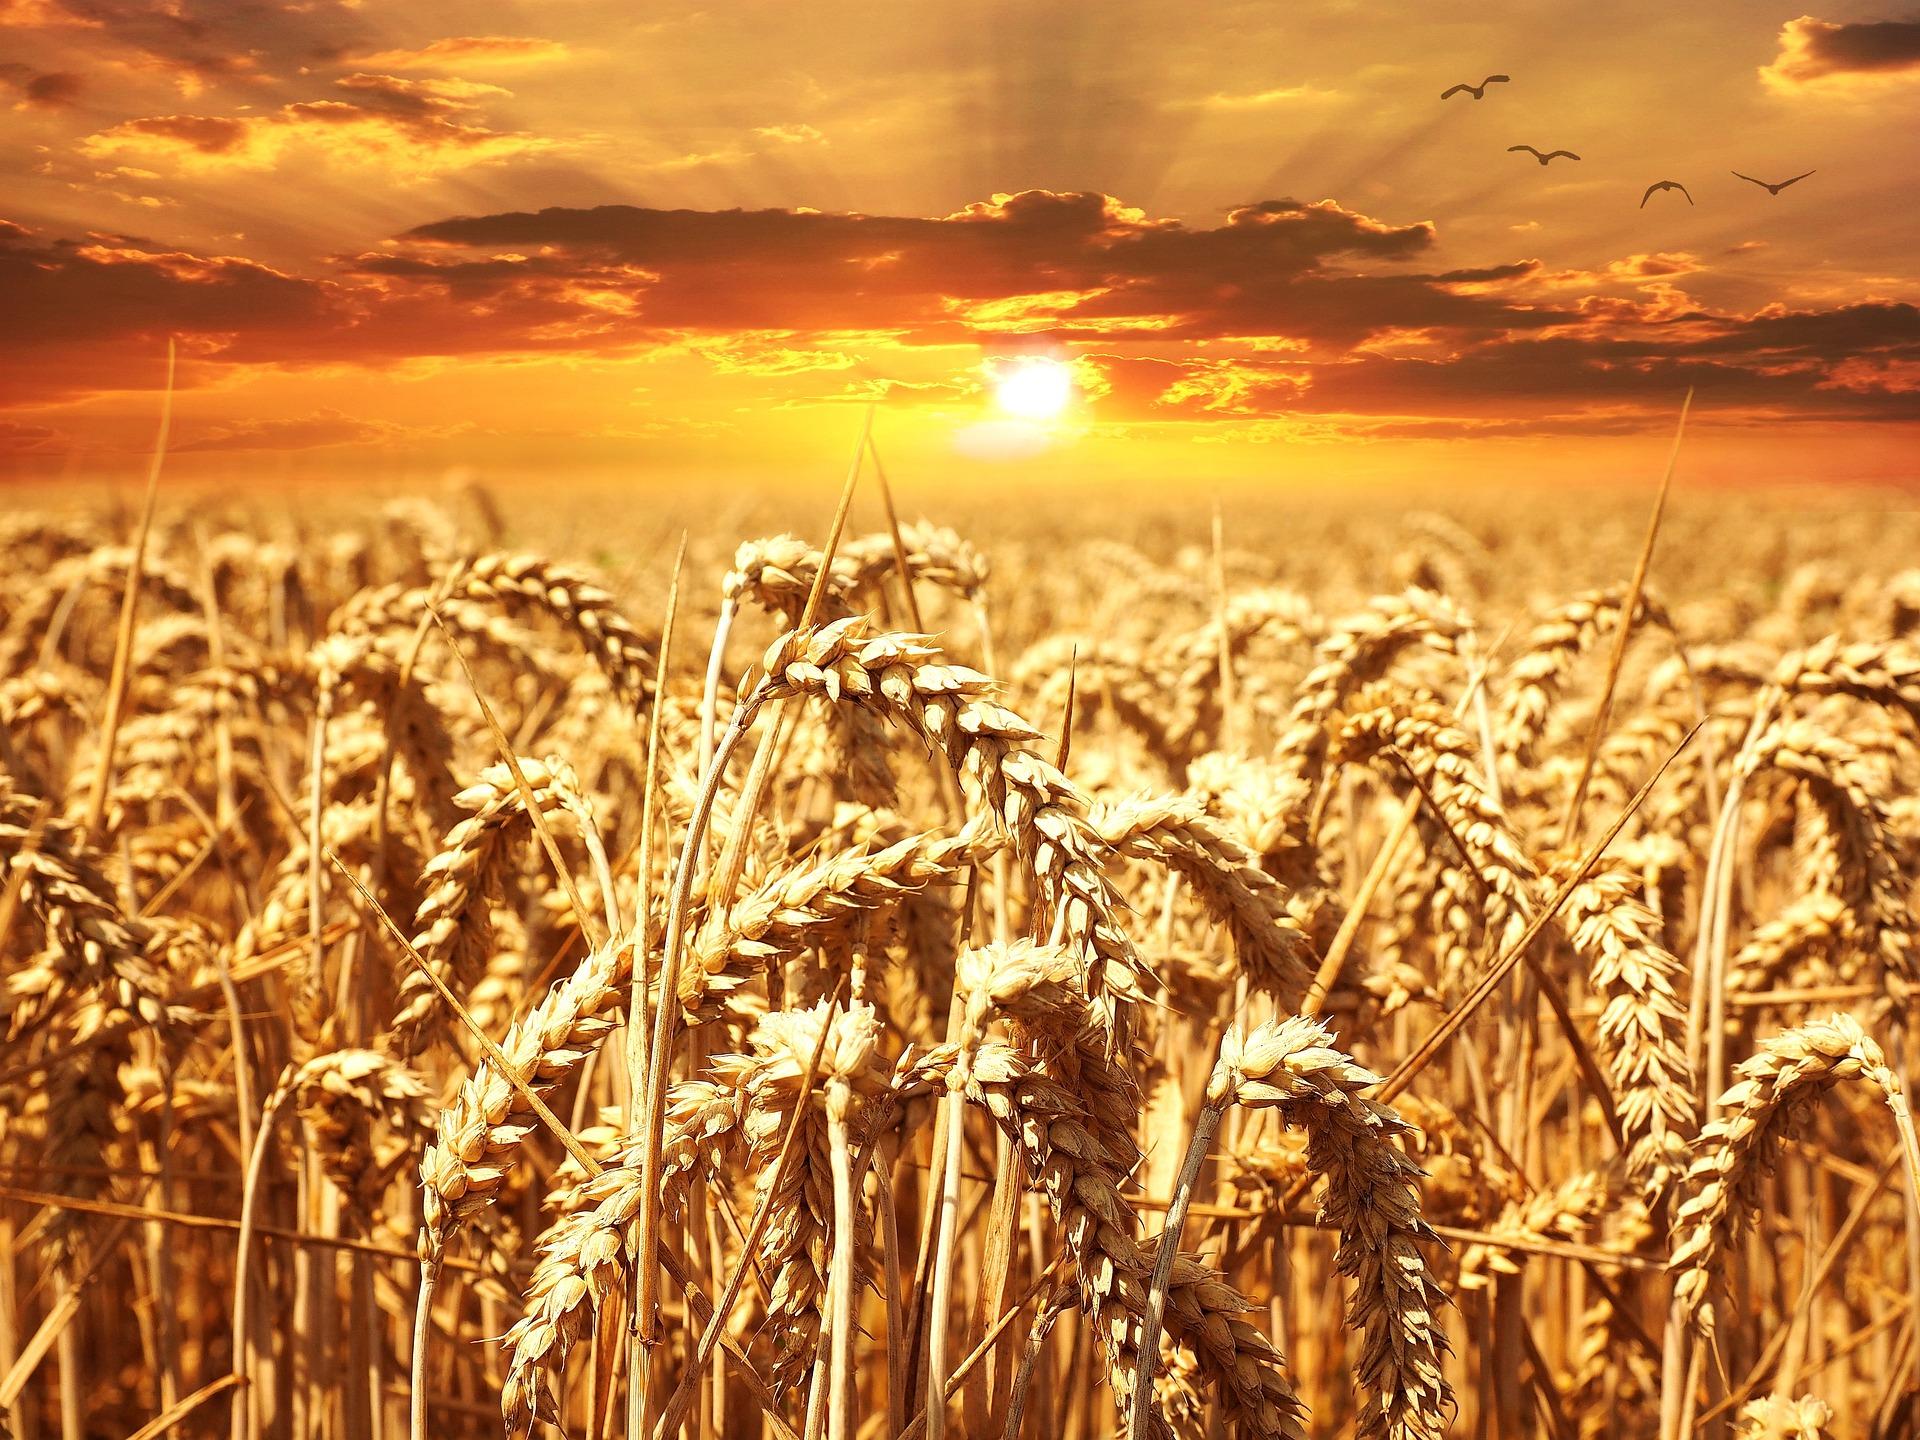 Barley dream meaning